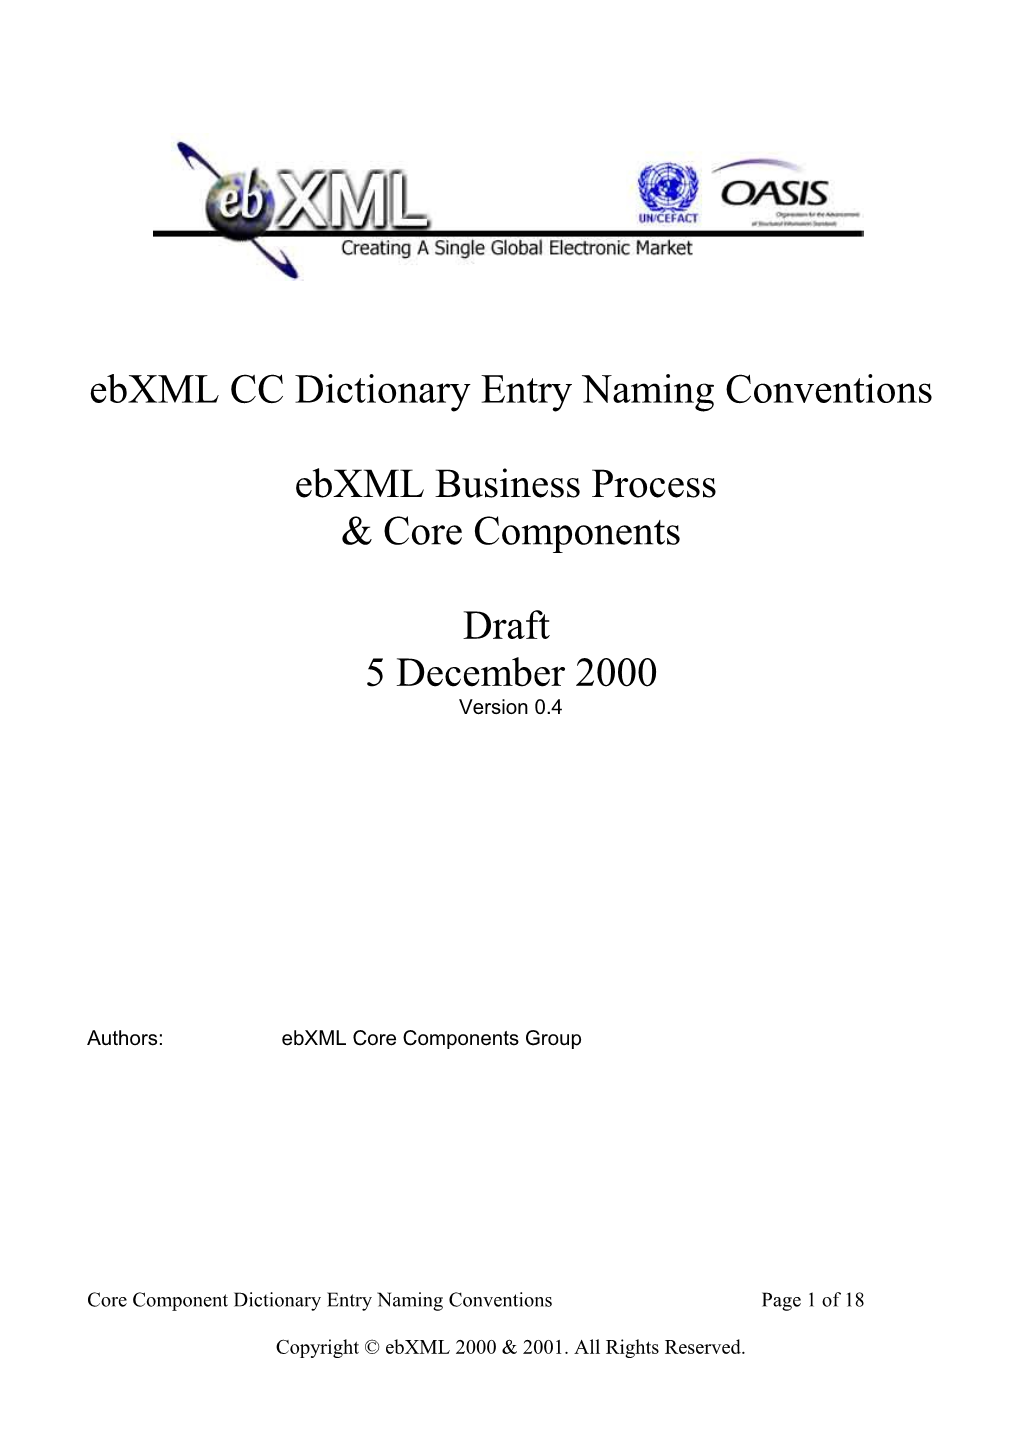 Ebxml CC Naming Conventions Draft